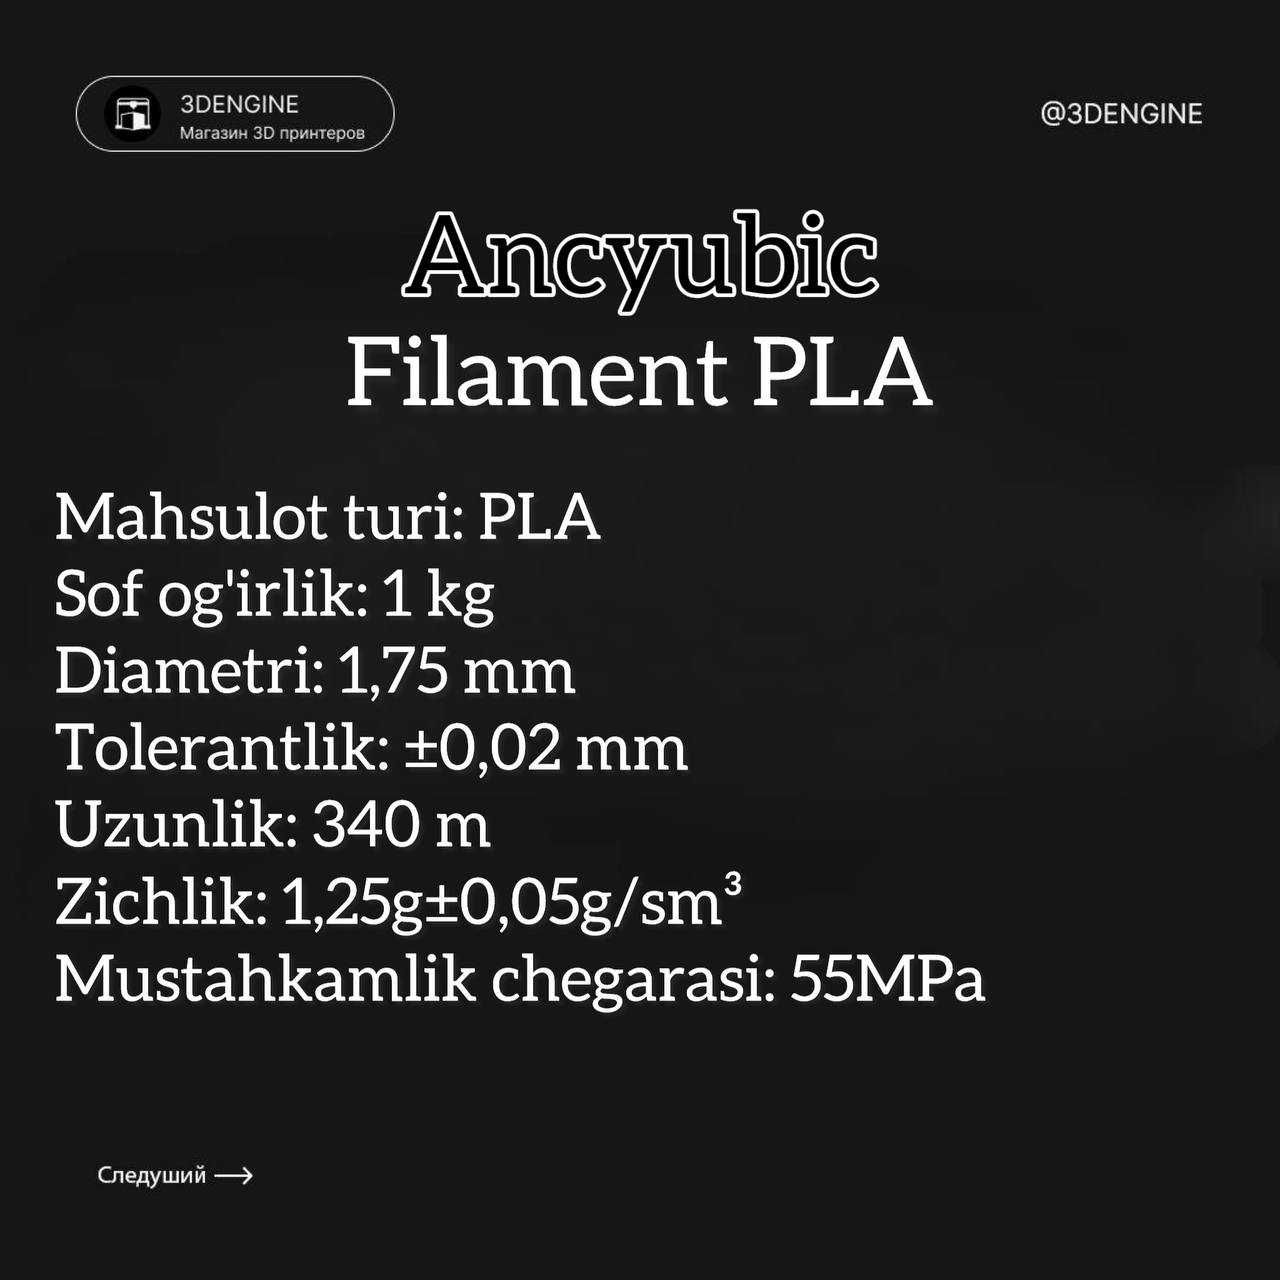 Ancyubic Filament Pla, Анкюбик Филамент Пла